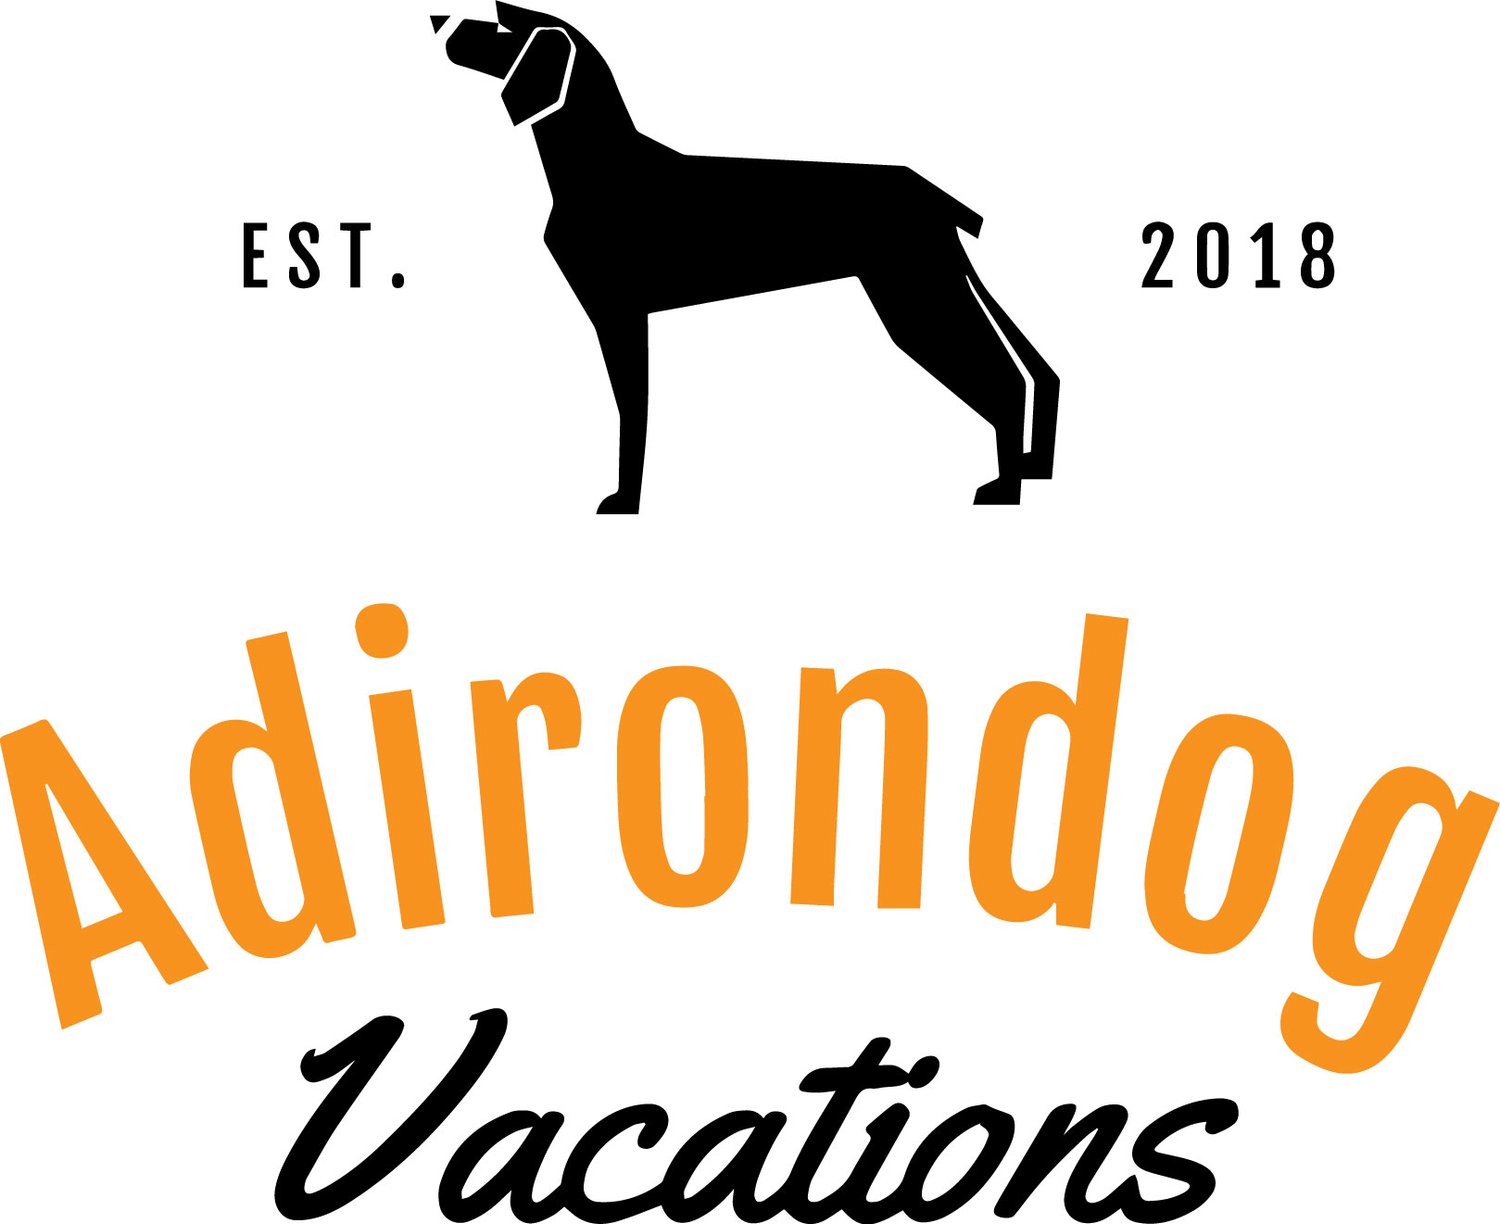 Adirondog Vacations